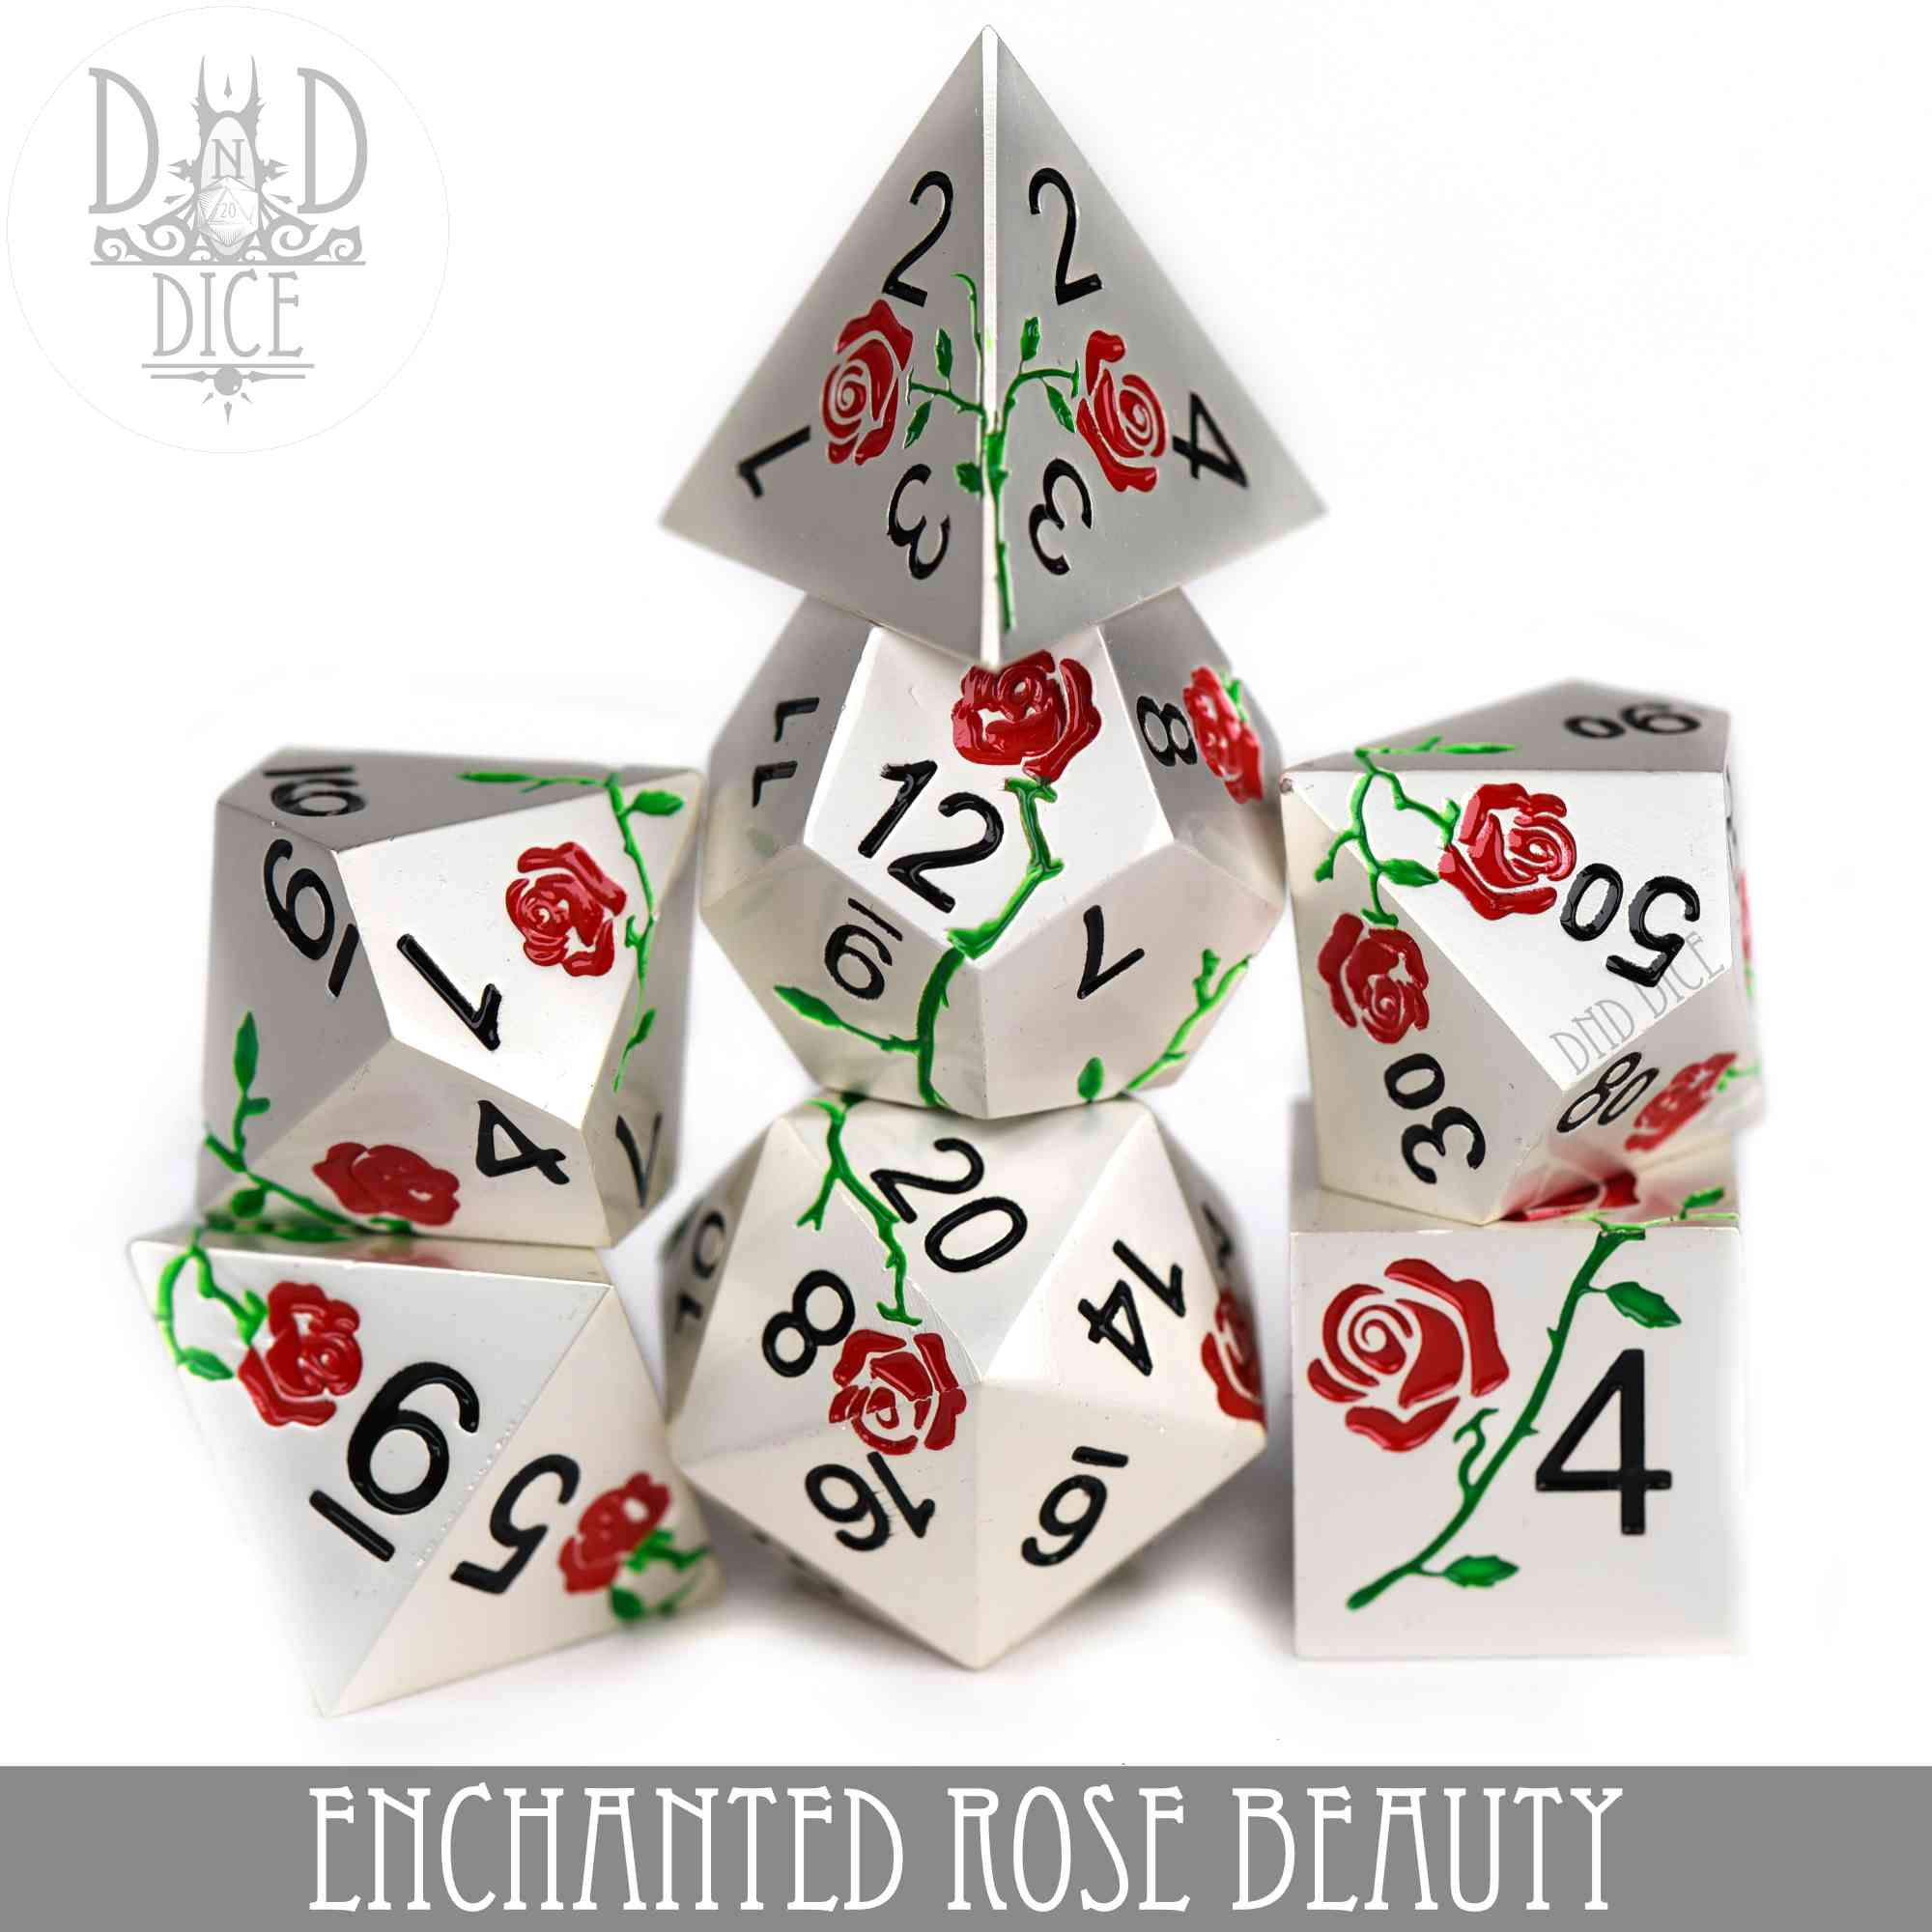 Enchanted Rose: Beauty - (Metal)